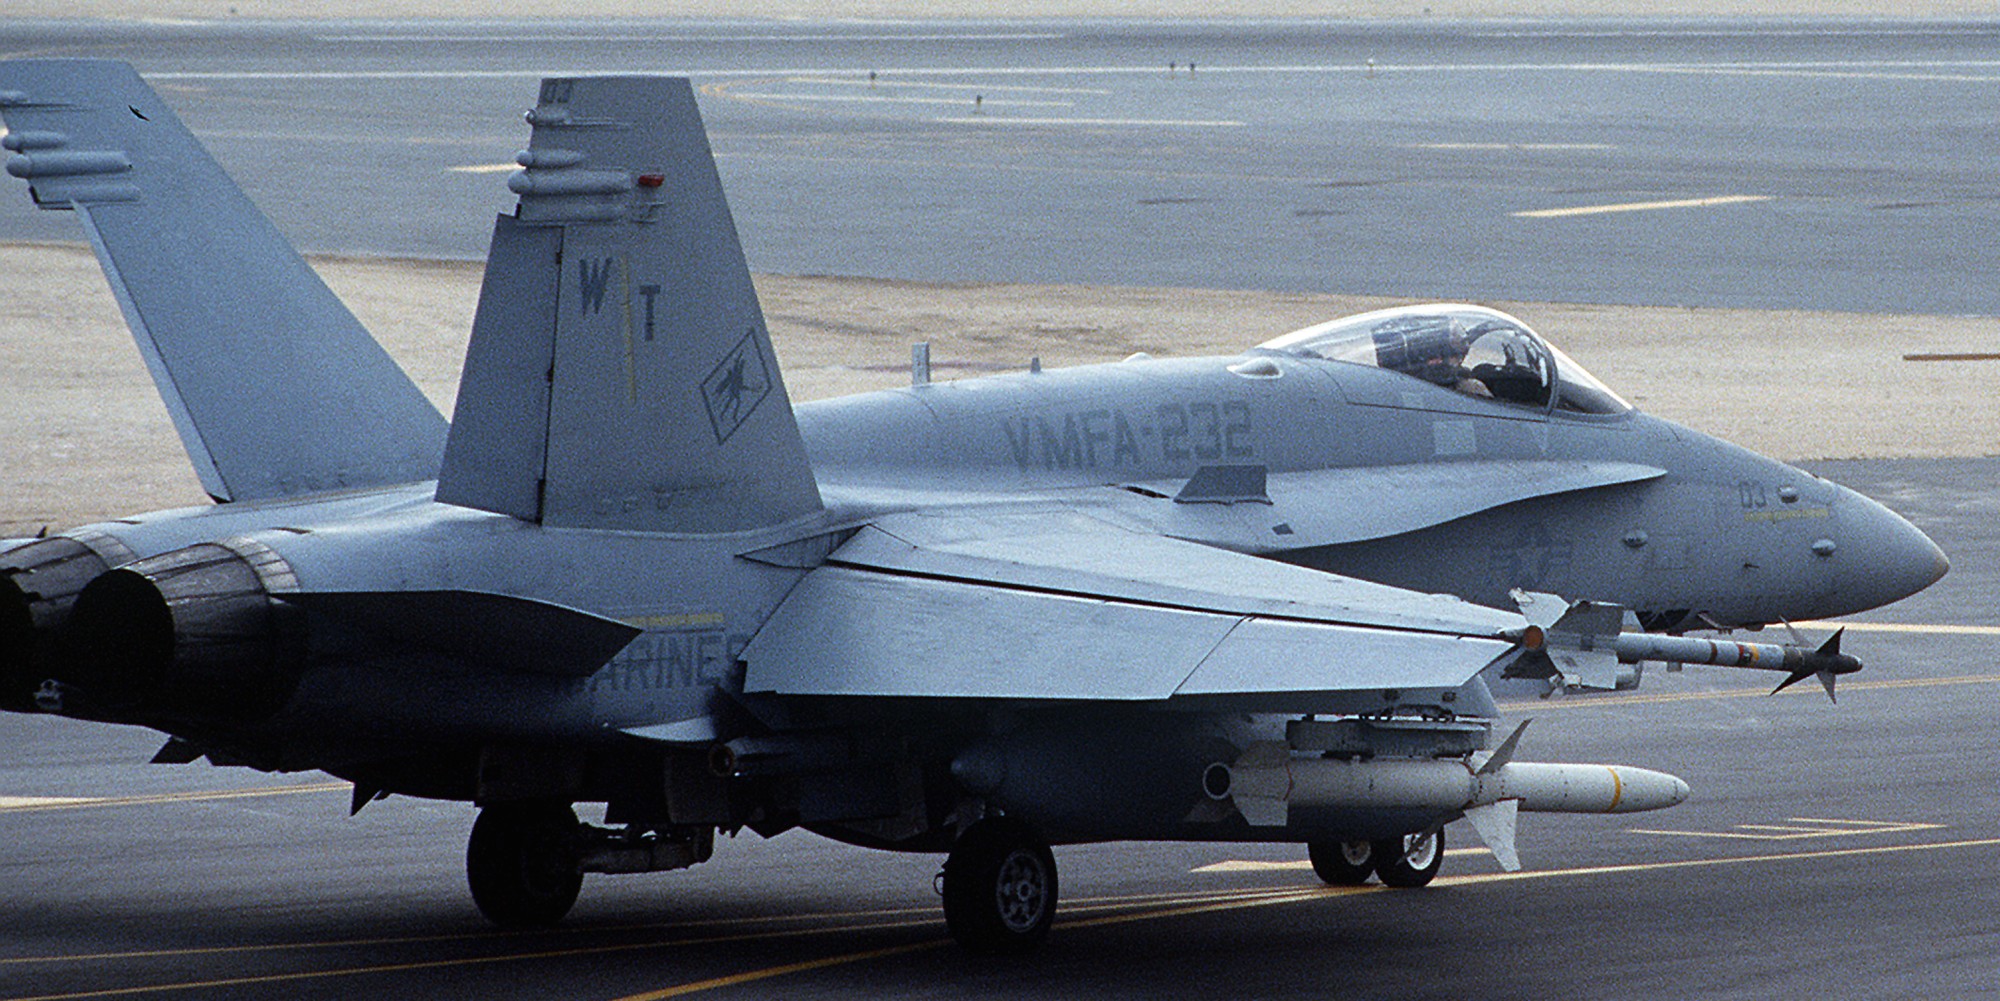 vmfa-232 red devils marine fighter attack squadron usmc f/a-18c hornet 208 operation desert storm 1992